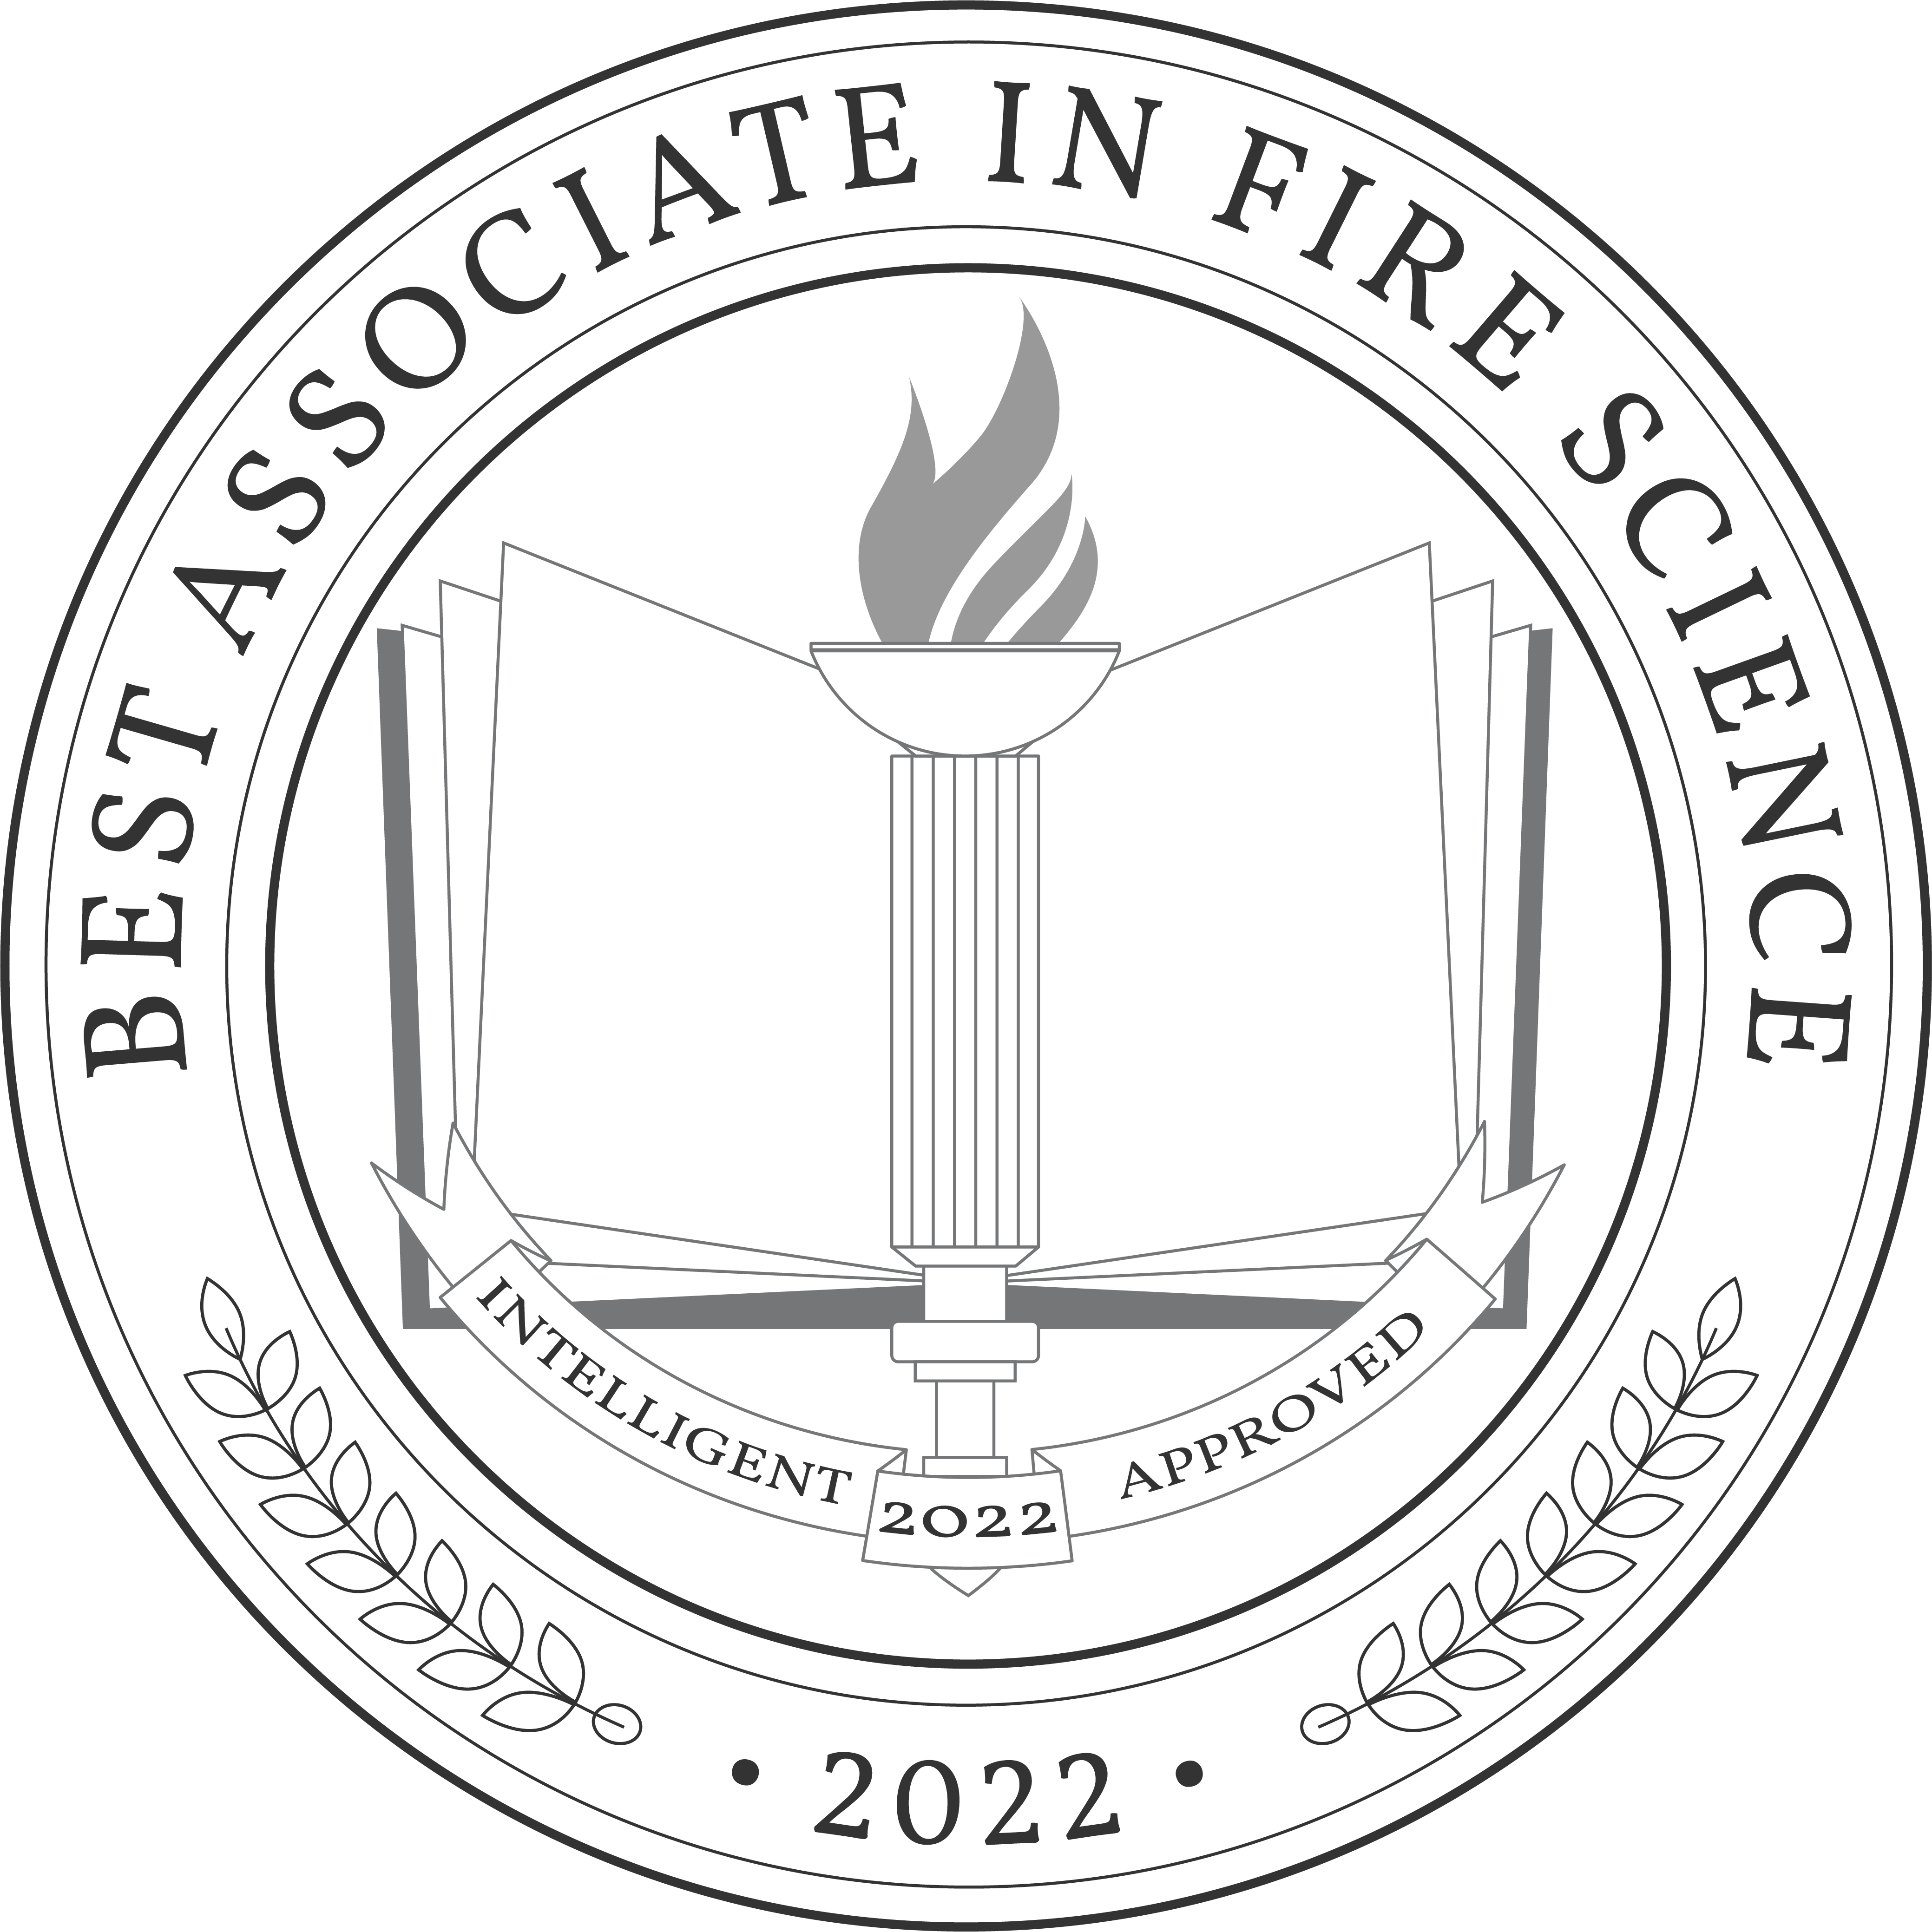 Best-Associate-in-Fire-Science-Badge.png